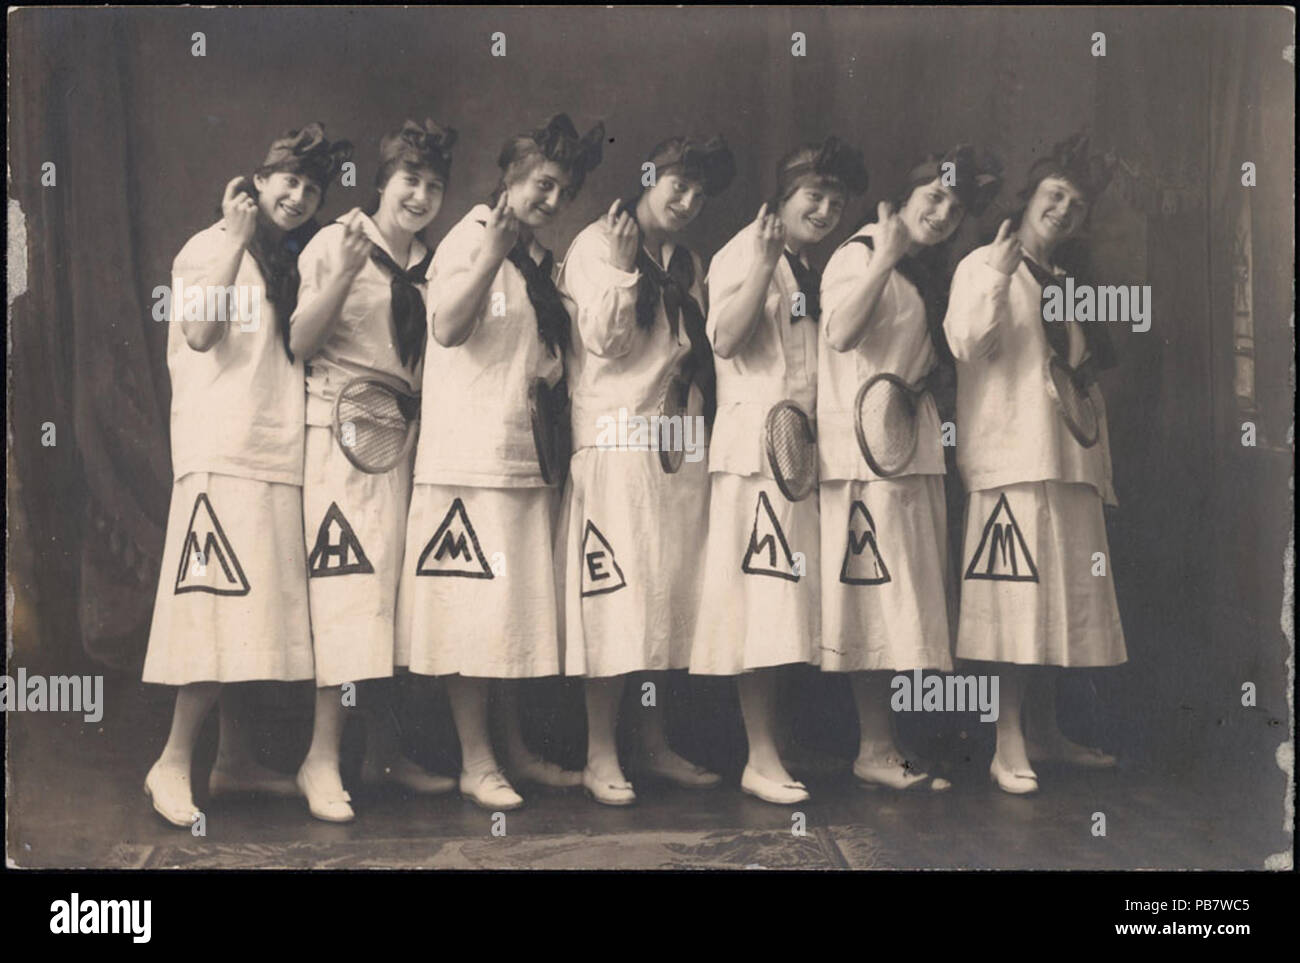 1309 Seven women in sports dress holding tennis rackets - team photo Stock Photo